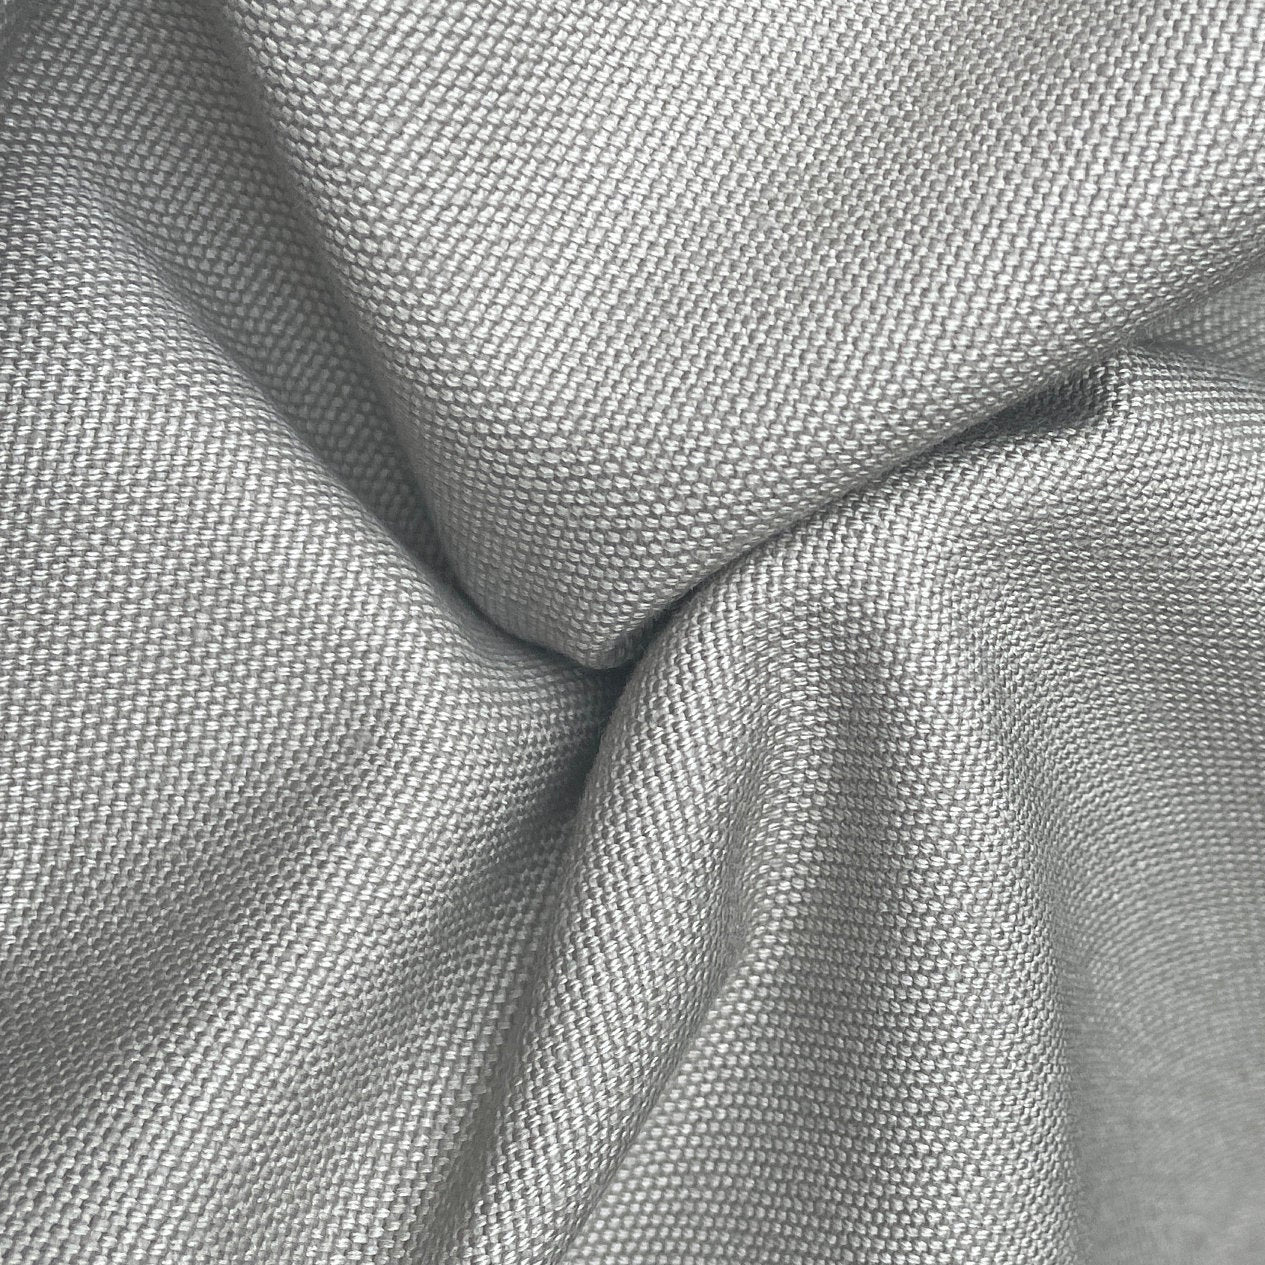 cotton canvas fabric